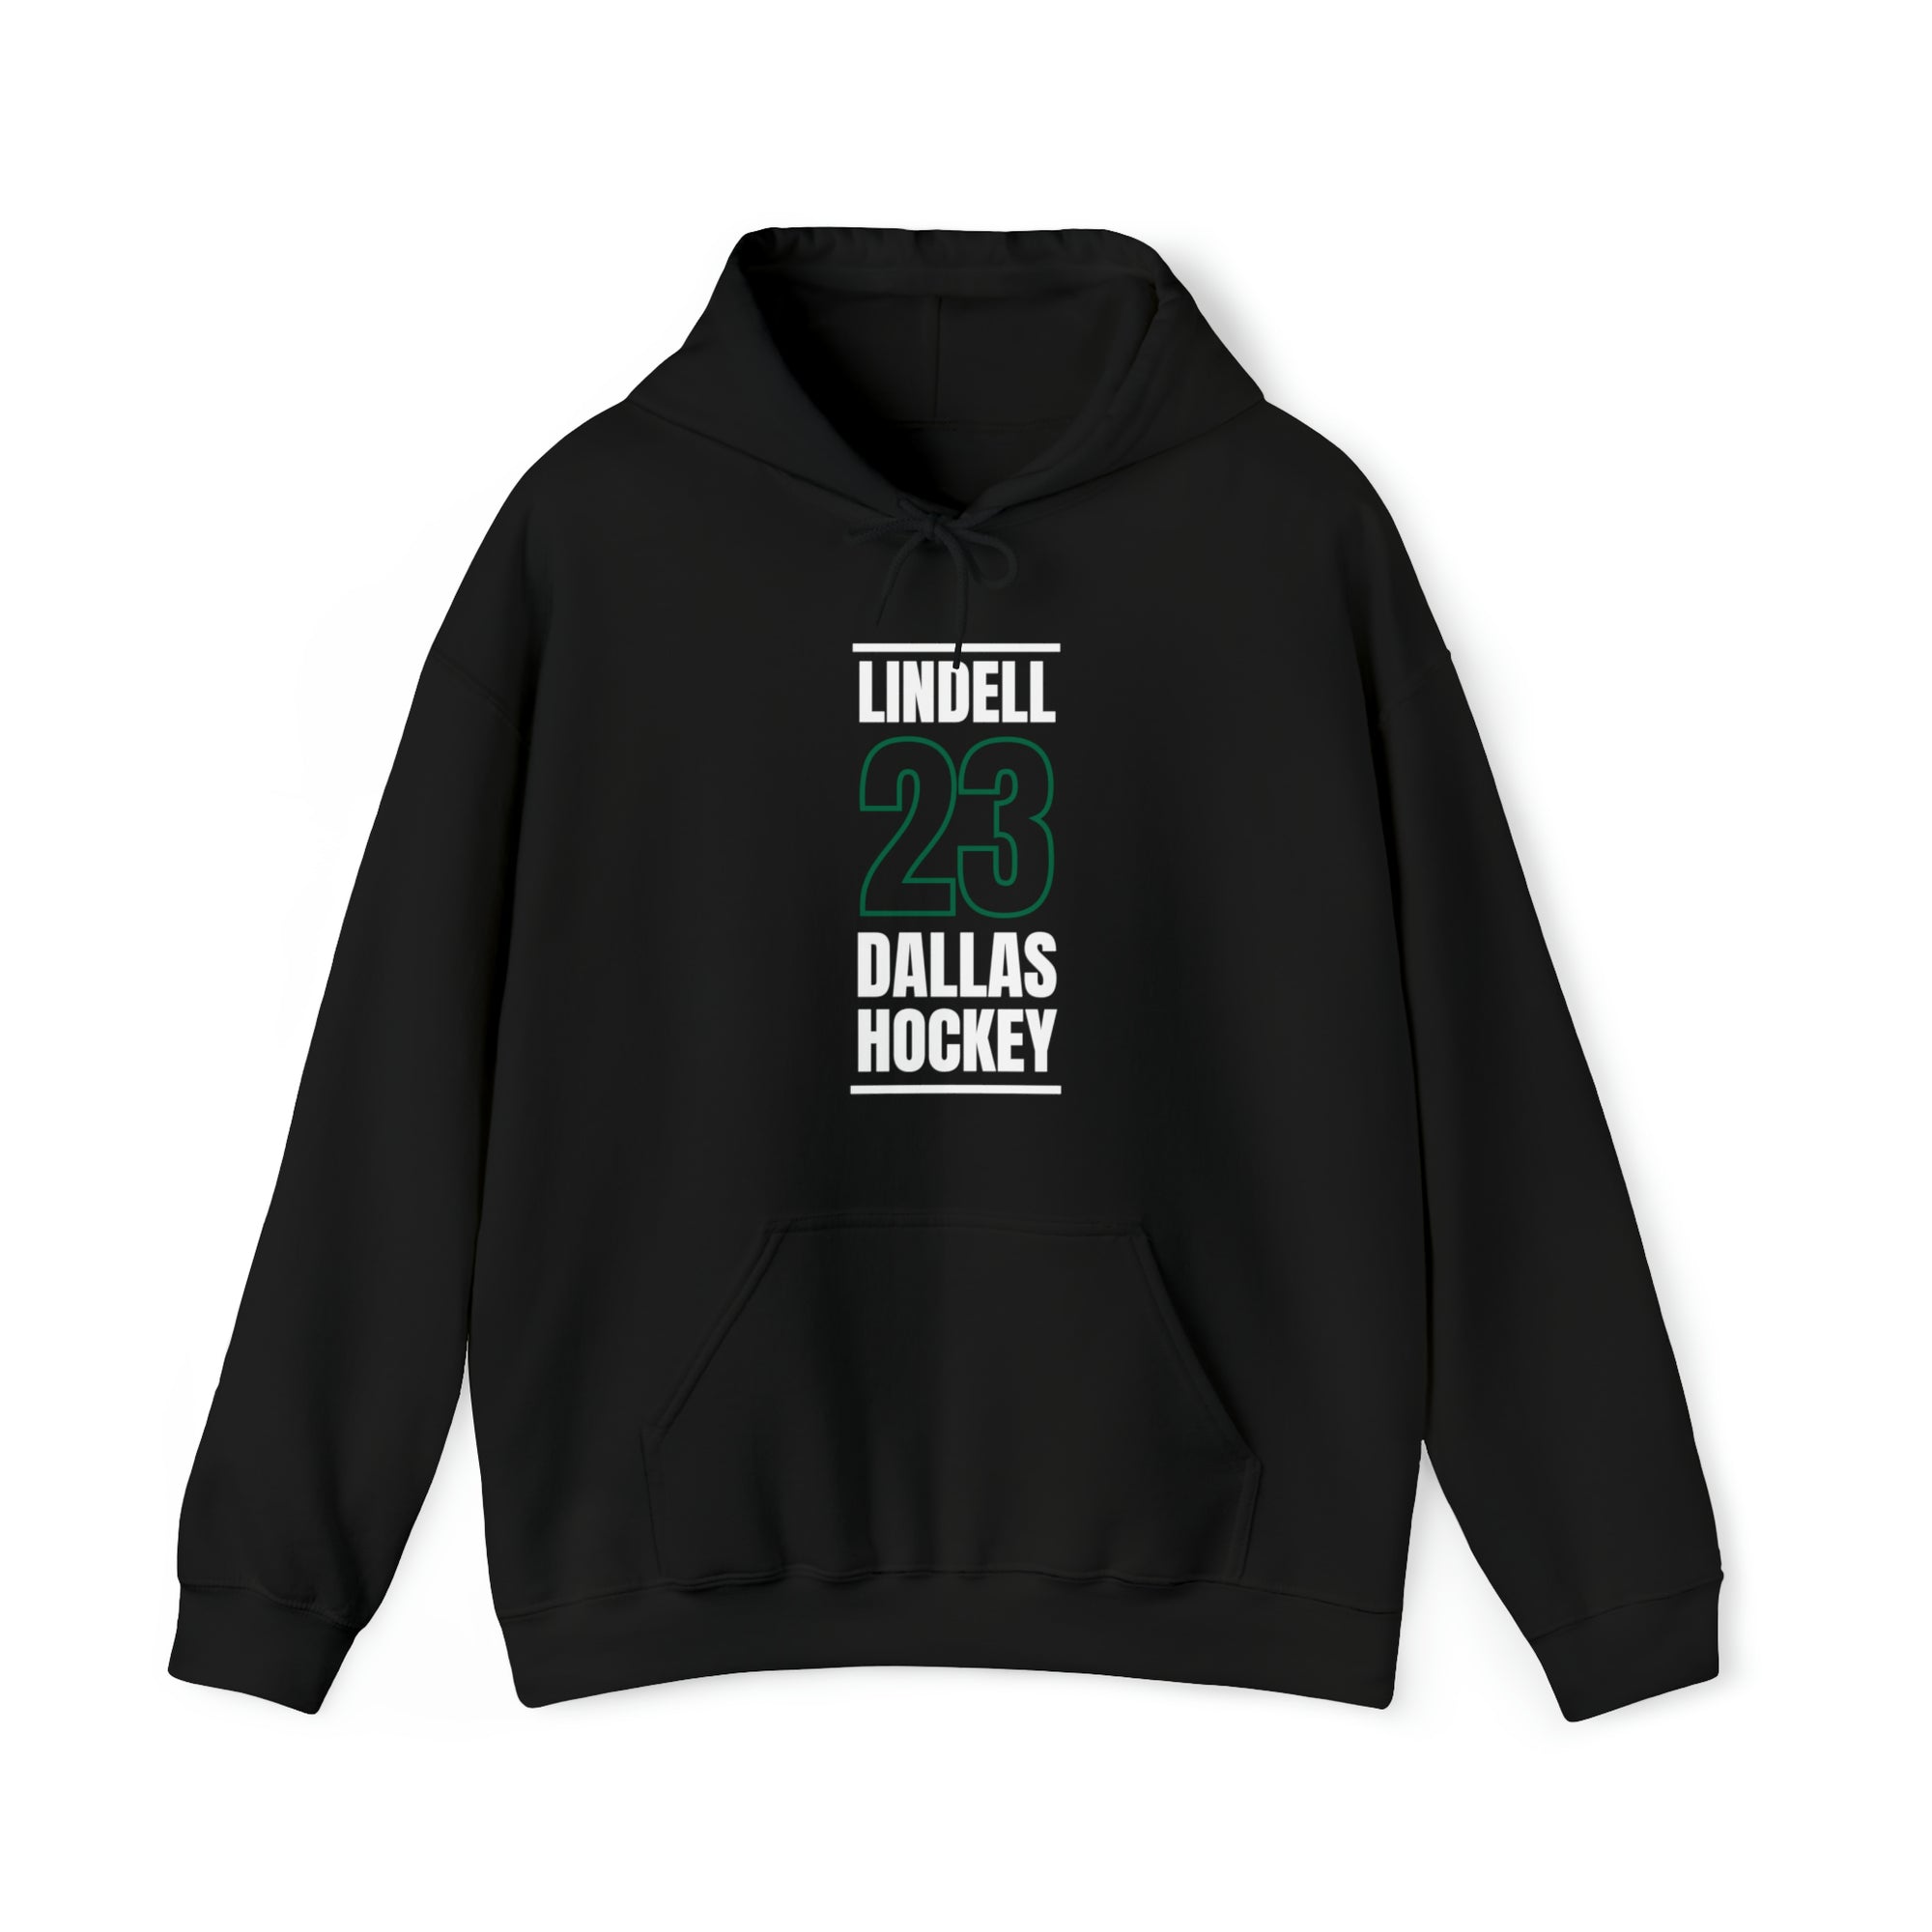 Lindell 23 Dallas Hockey Black Vertical Design Unisex Hooded Sweatshirt